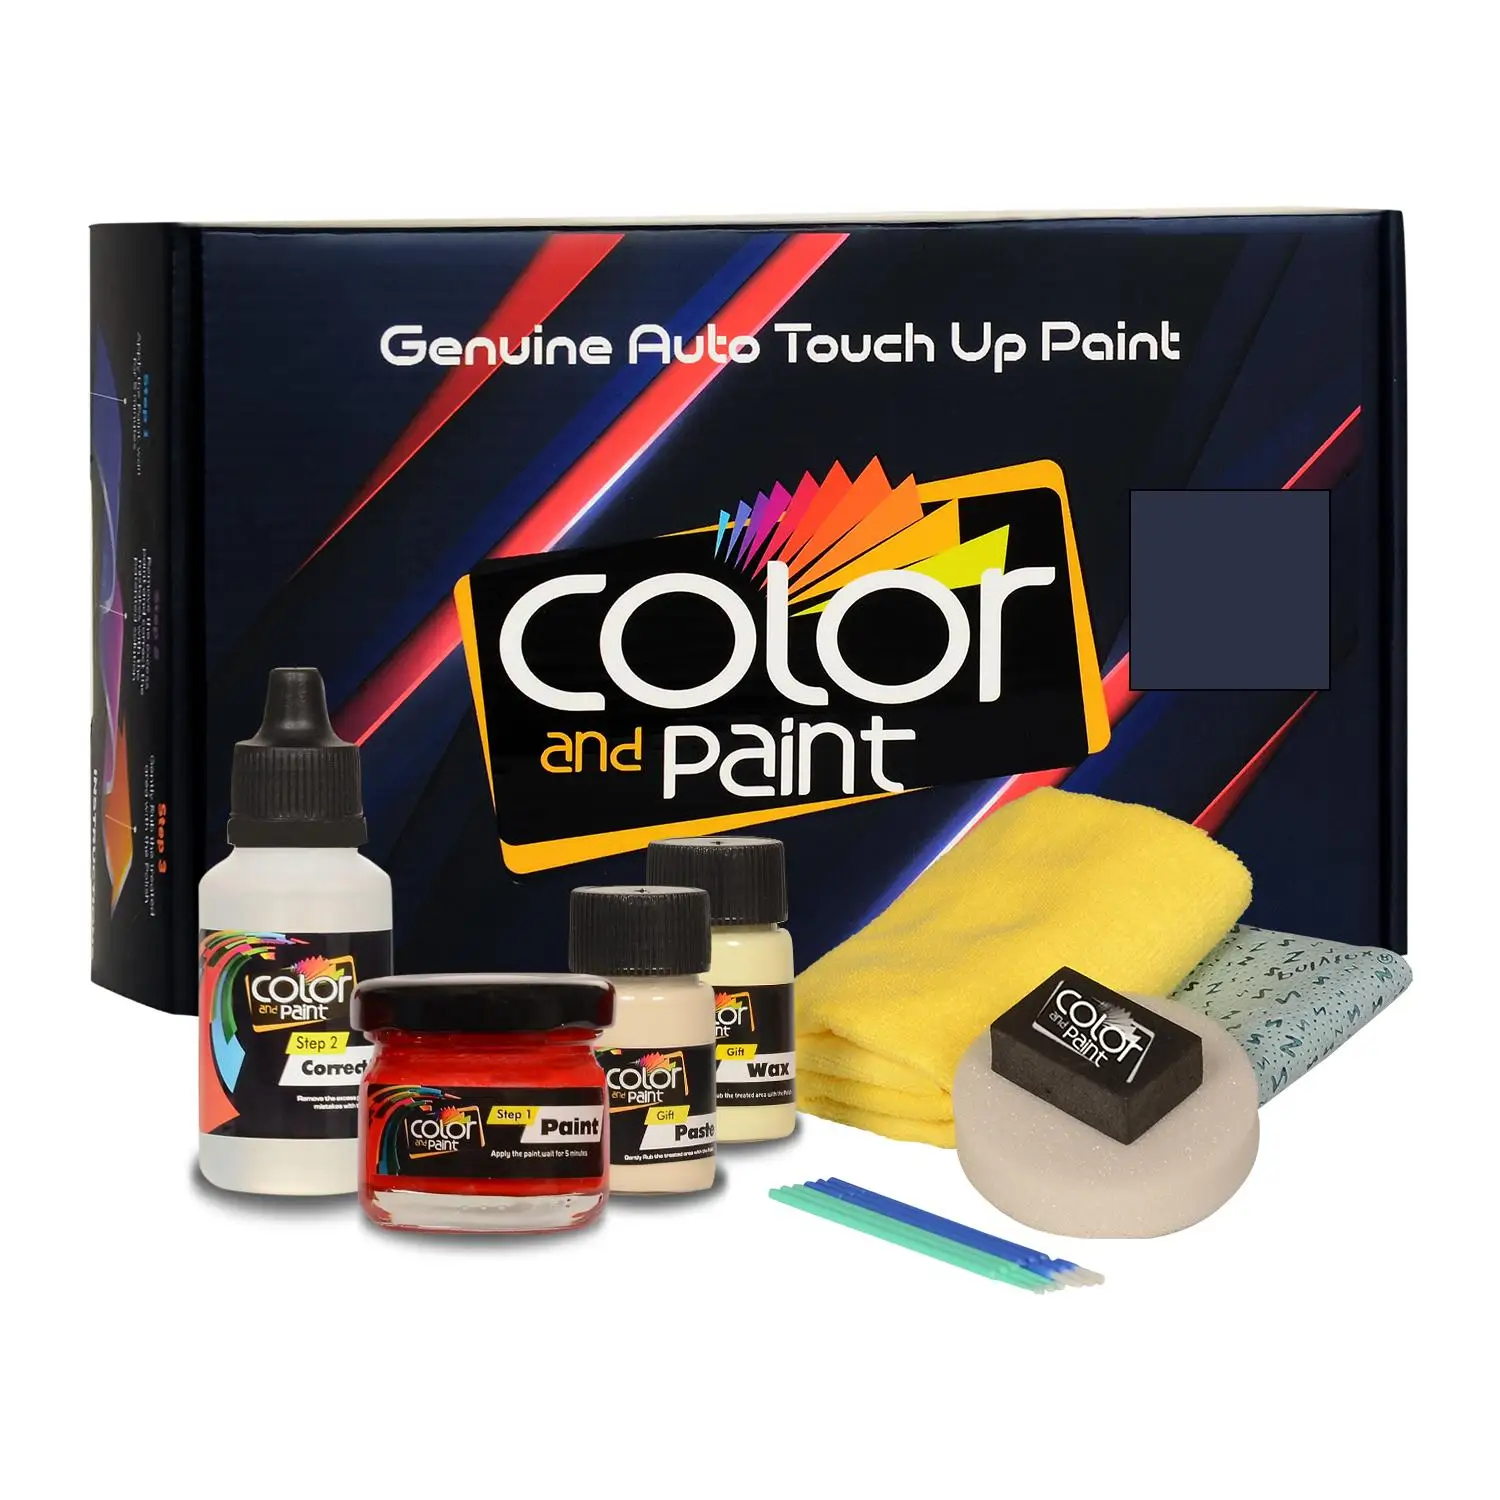 

Color and Paint compatible with Porsche Automotive Touch Up Paint - PURPURIT METALILIC - M4W - Basic Care